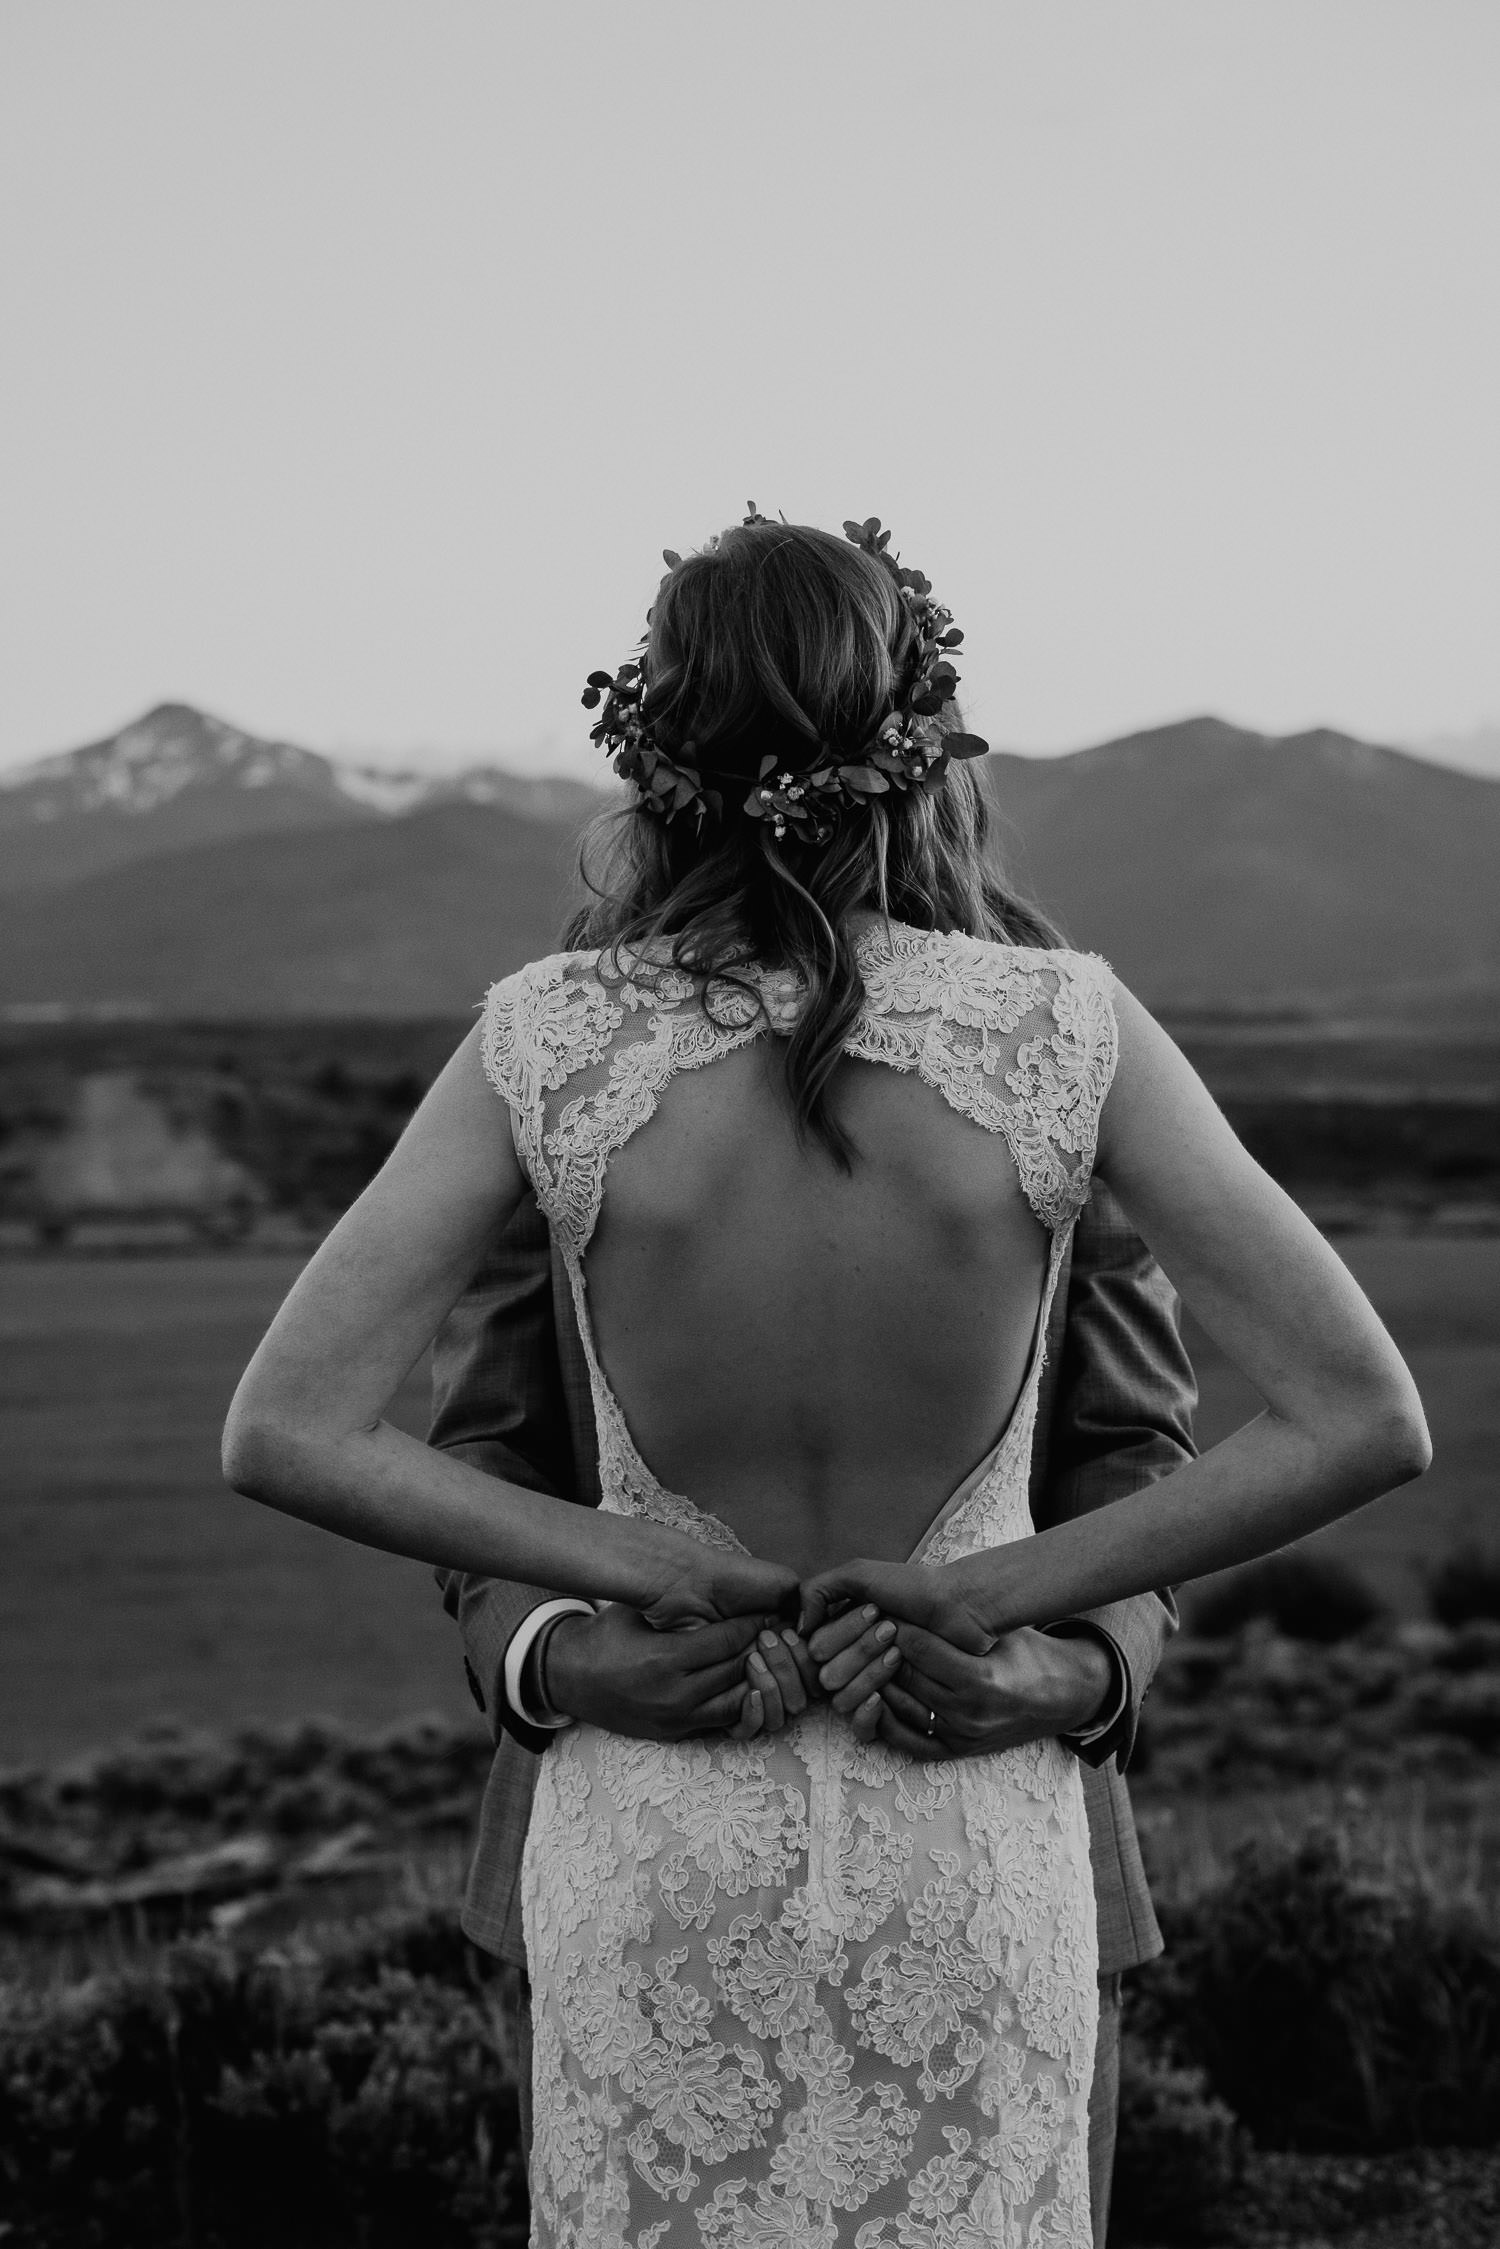 Colorado Backyard Elopement | Run Wild With Me Photography